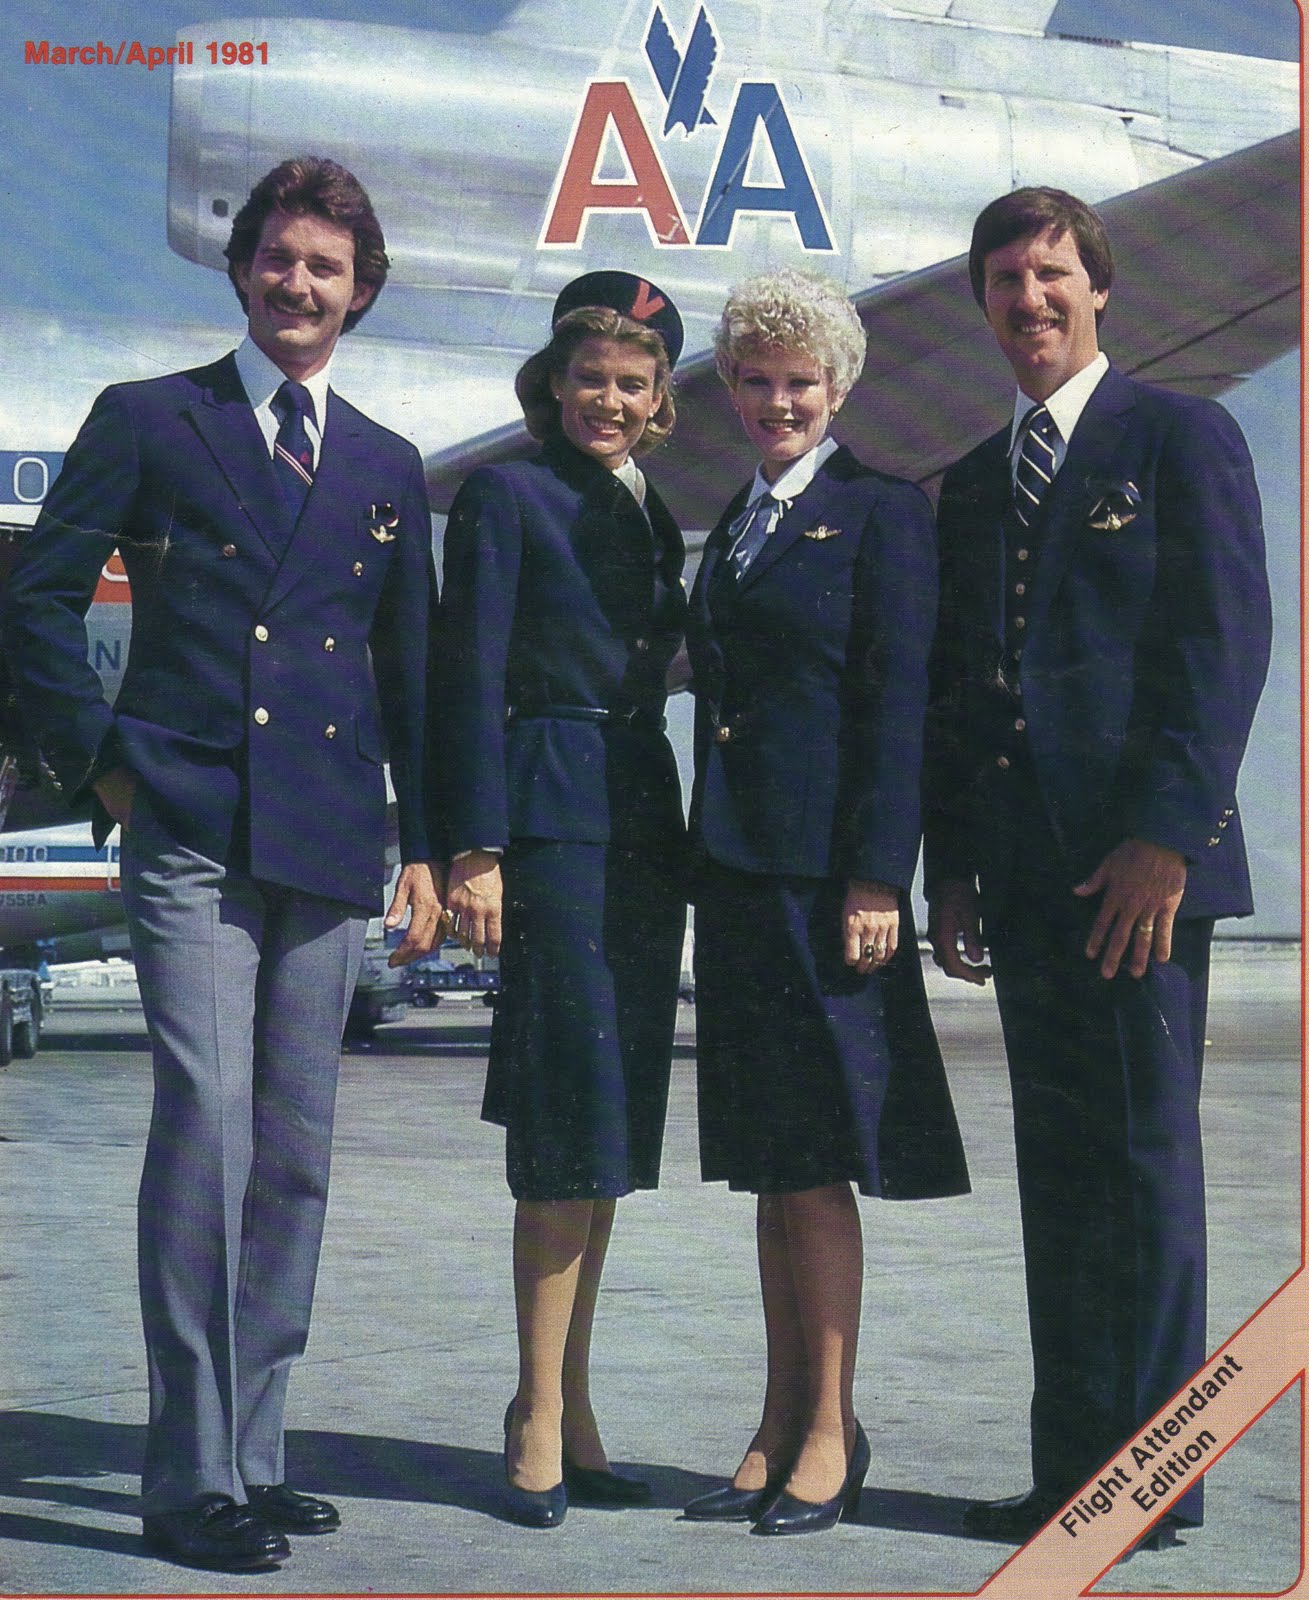 American Airline Uniform